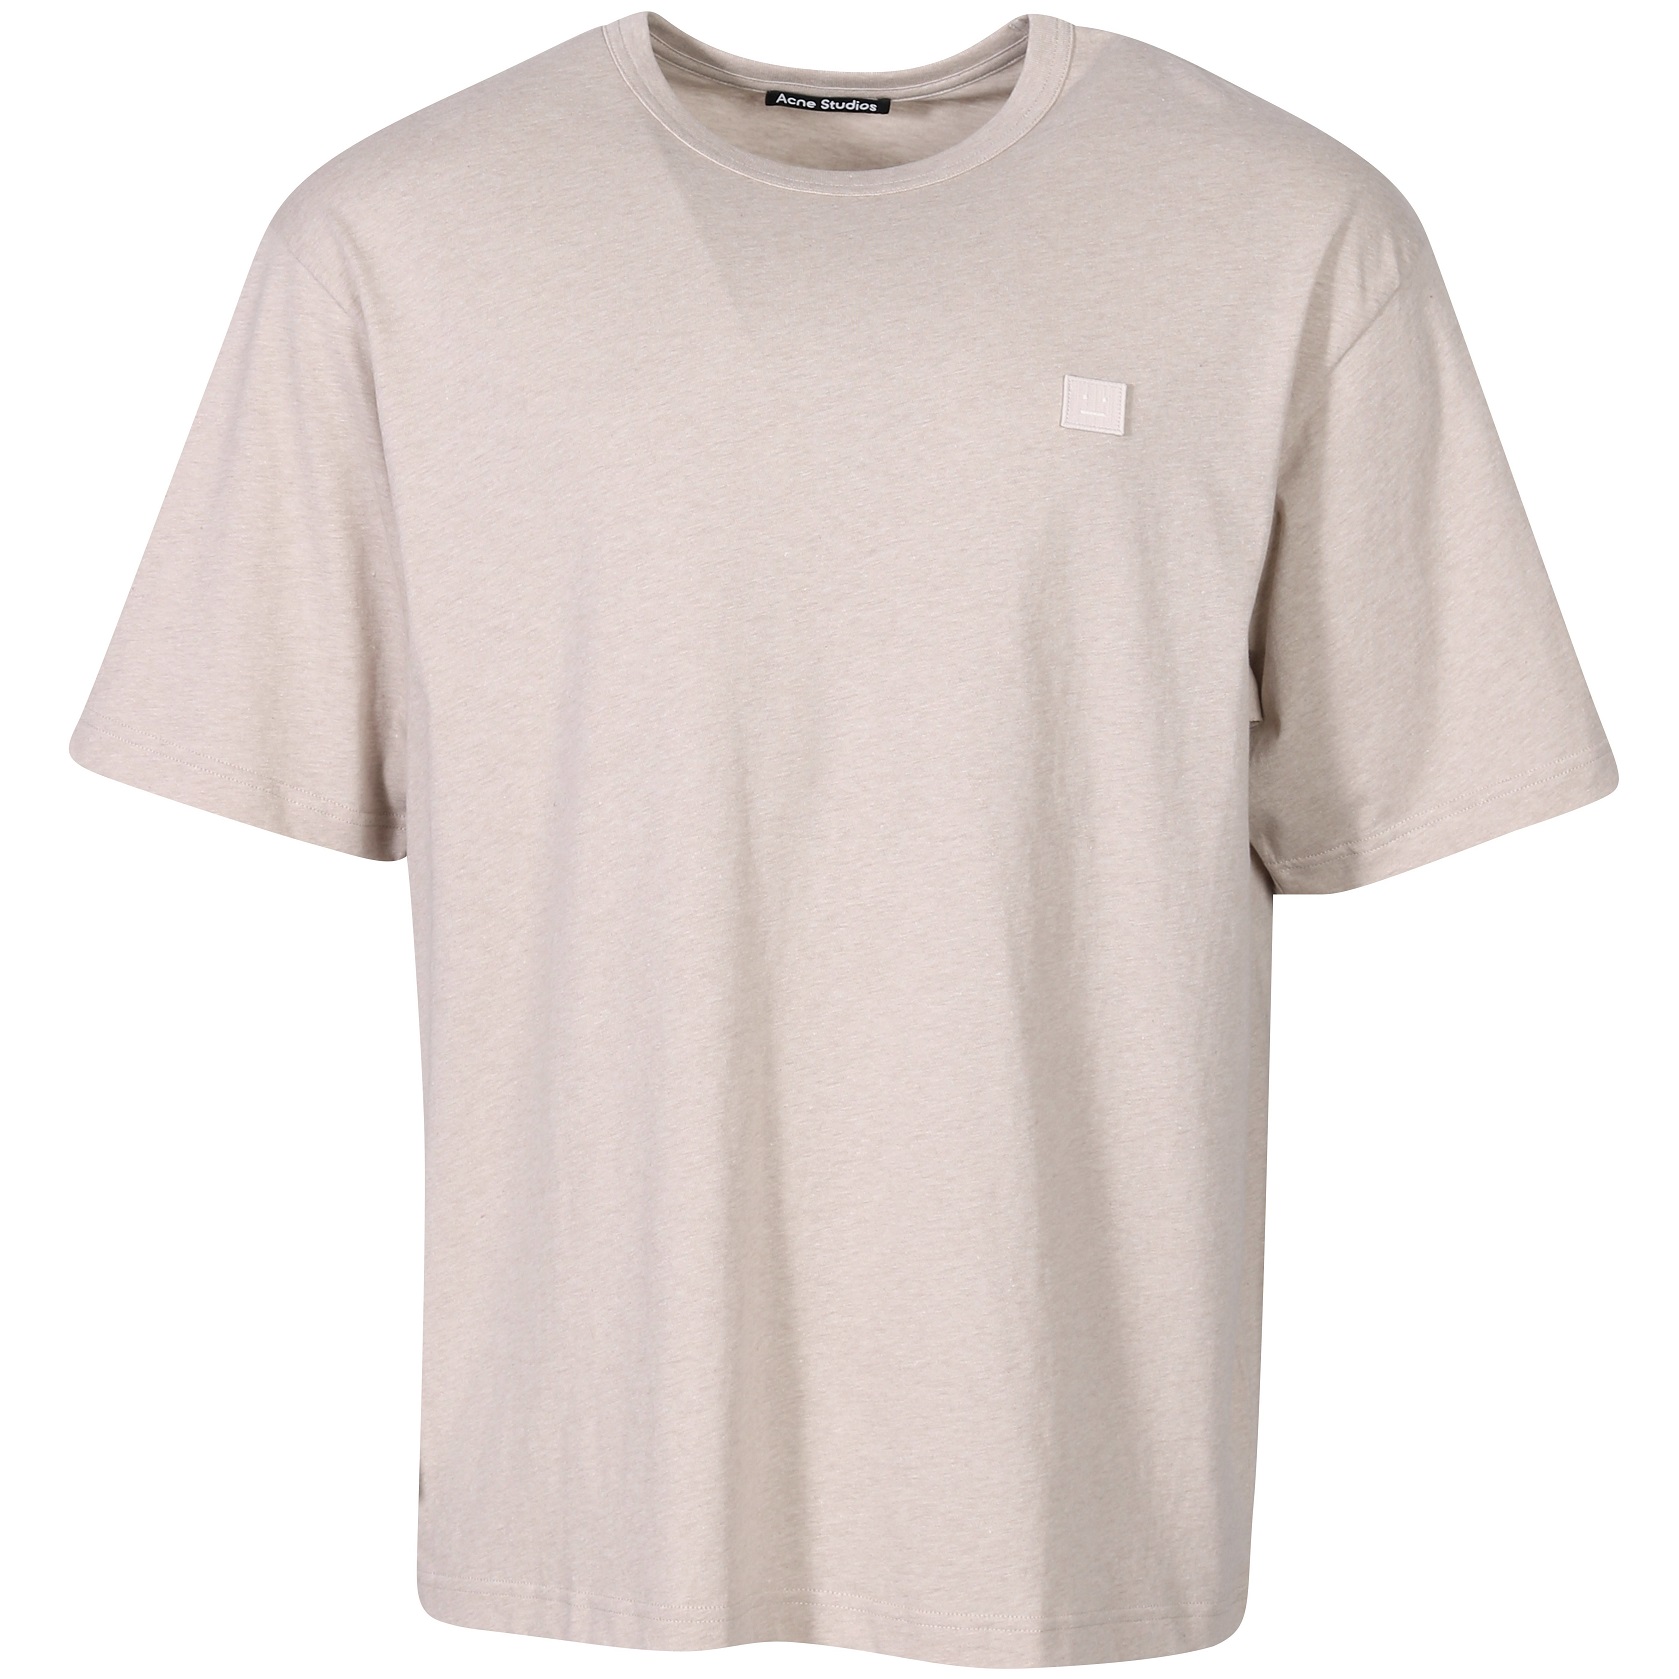 ACNE STUDIOS Unisex Oversize Face T-Shirt in Oatmeal Melange XL